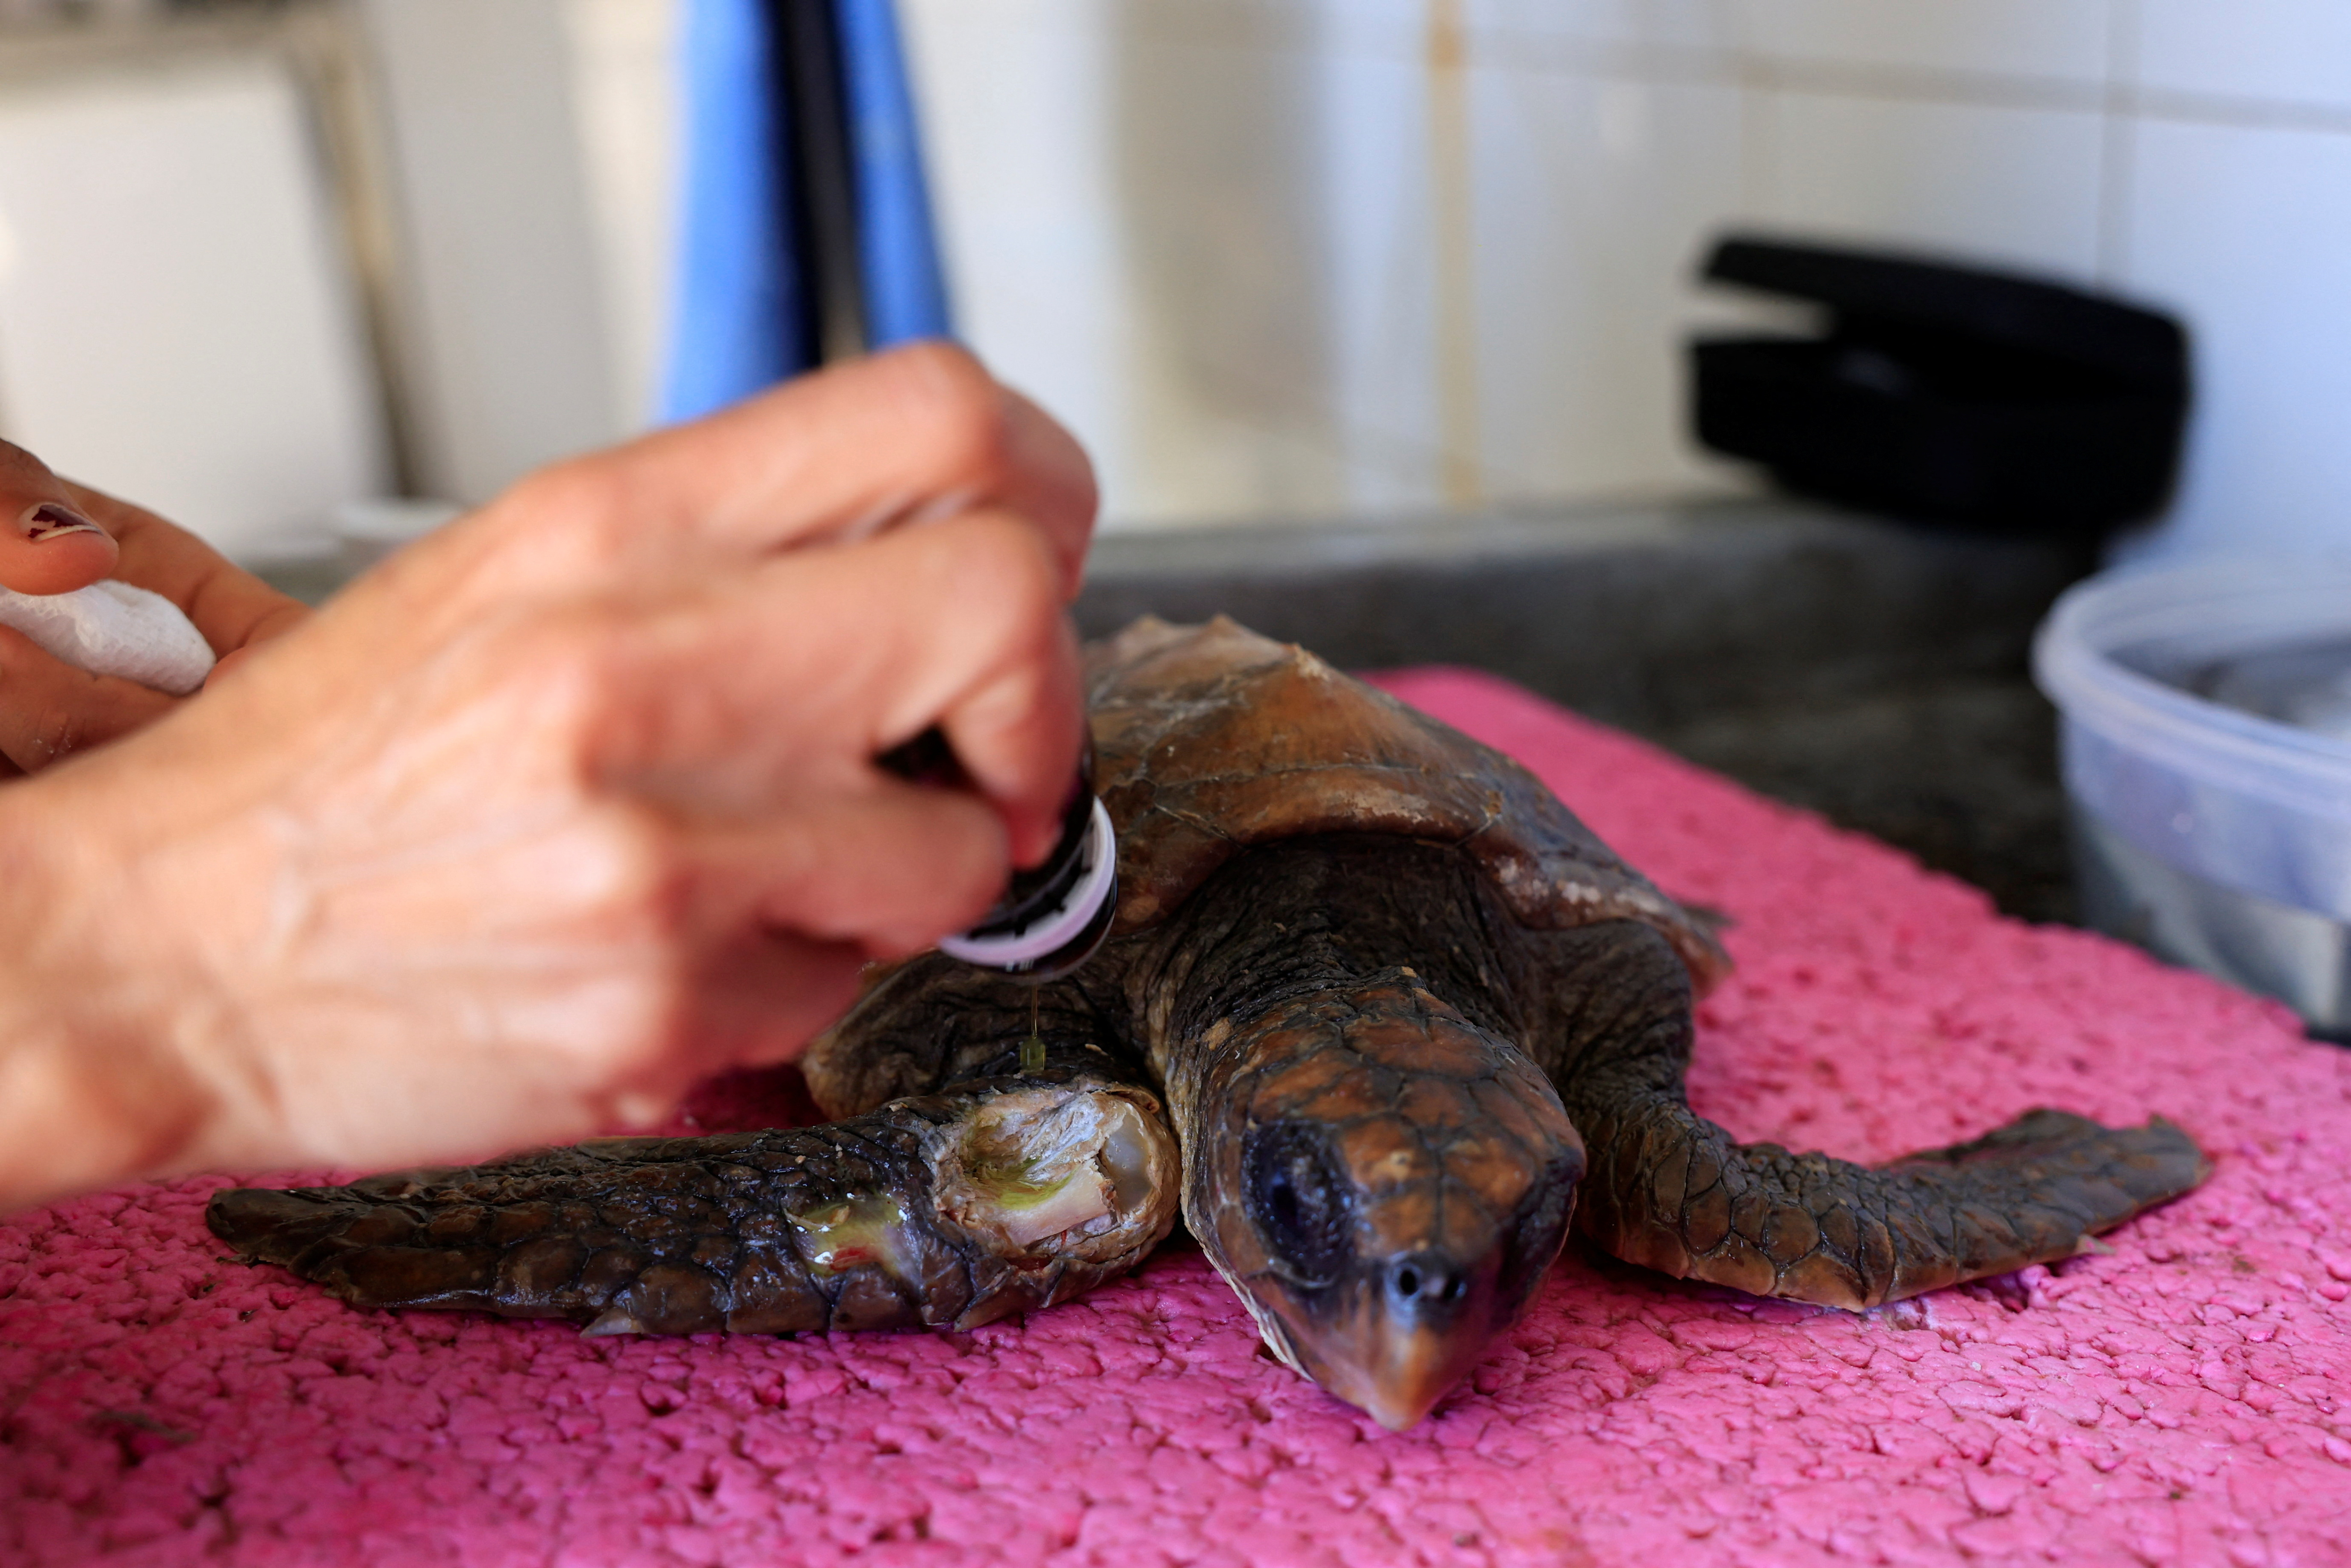 Yurena Castrillo, a veterinarian at the Taliarte Wildlife Recovery Center, treats an injured Caretta Caretta turtle, in the island of Gran Canaria